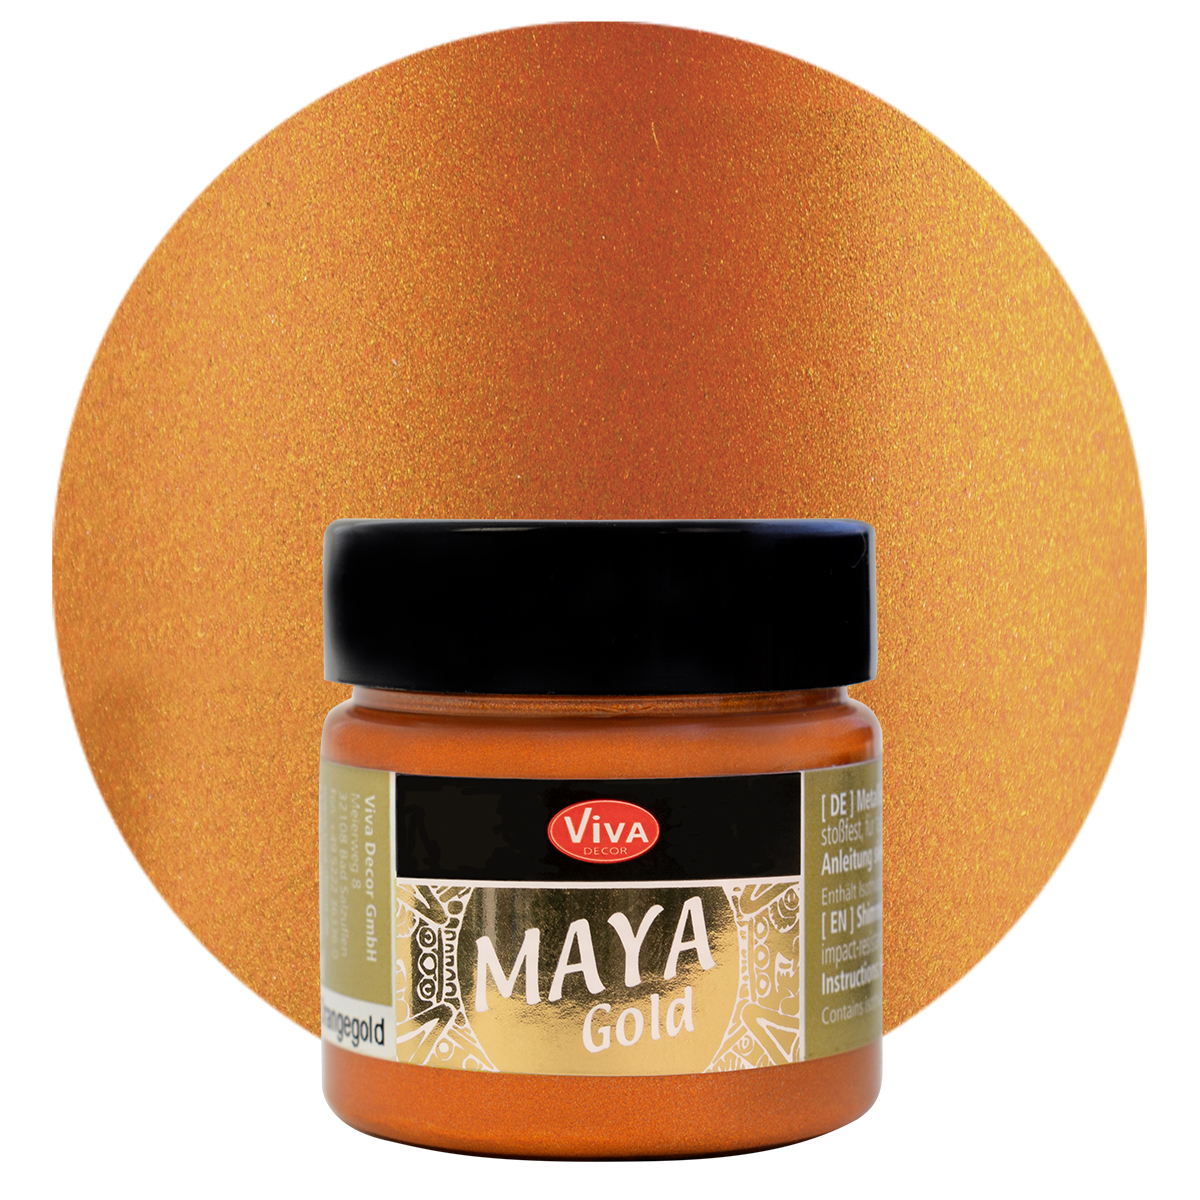  Maya Gold, 45ml  Metallicfarbe 